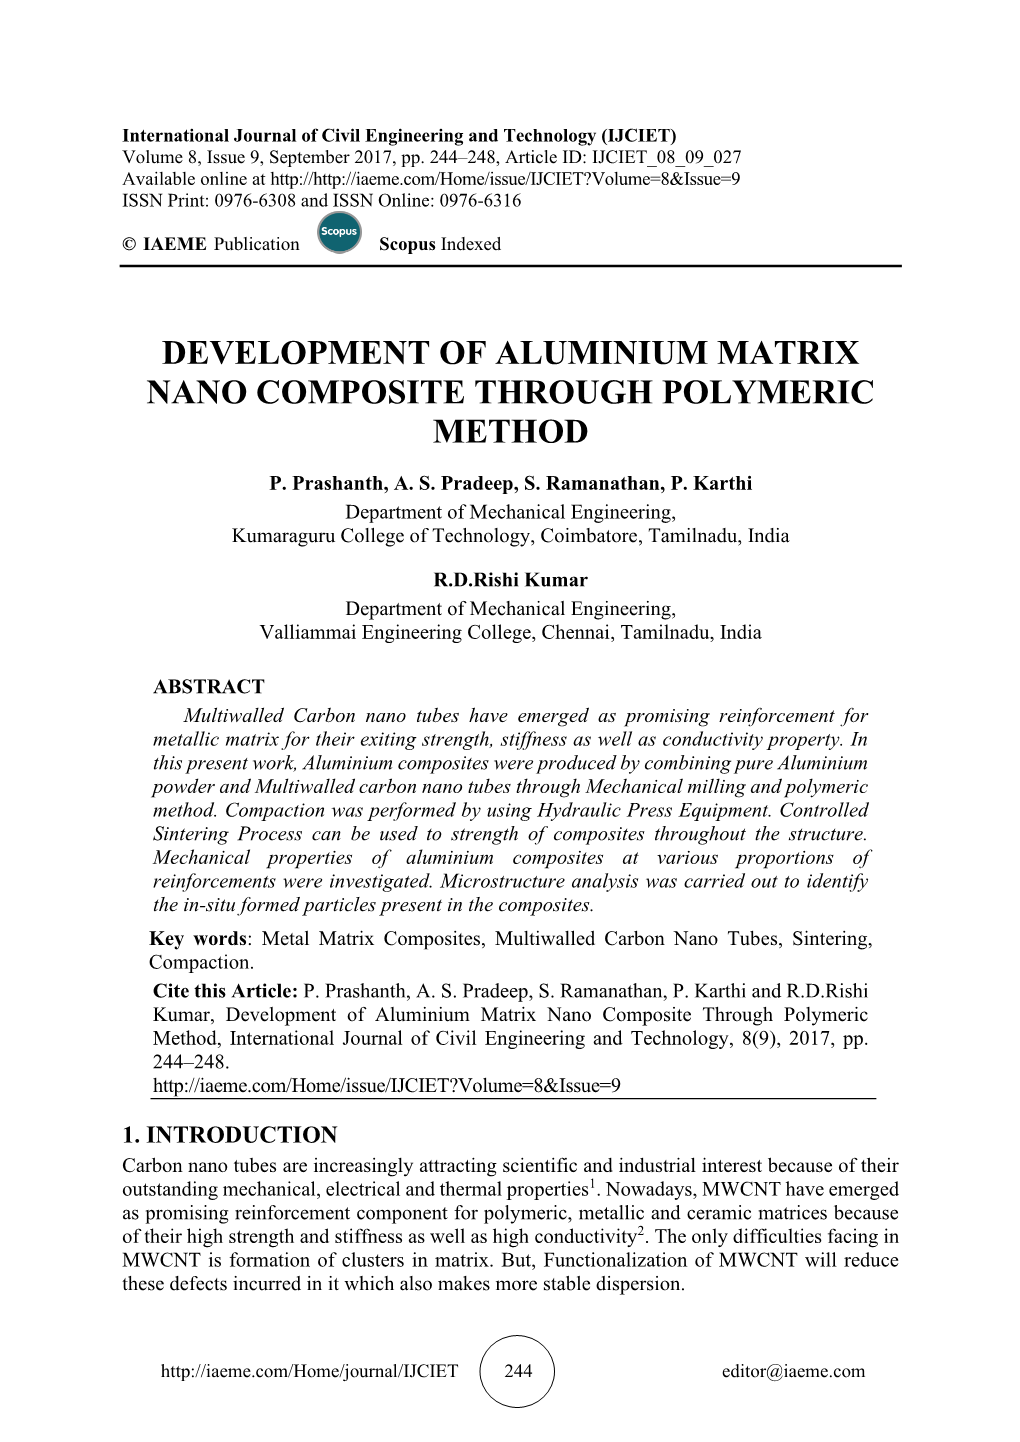 Development of Aluminium Matrix Nano Composite Through Polymeric Method